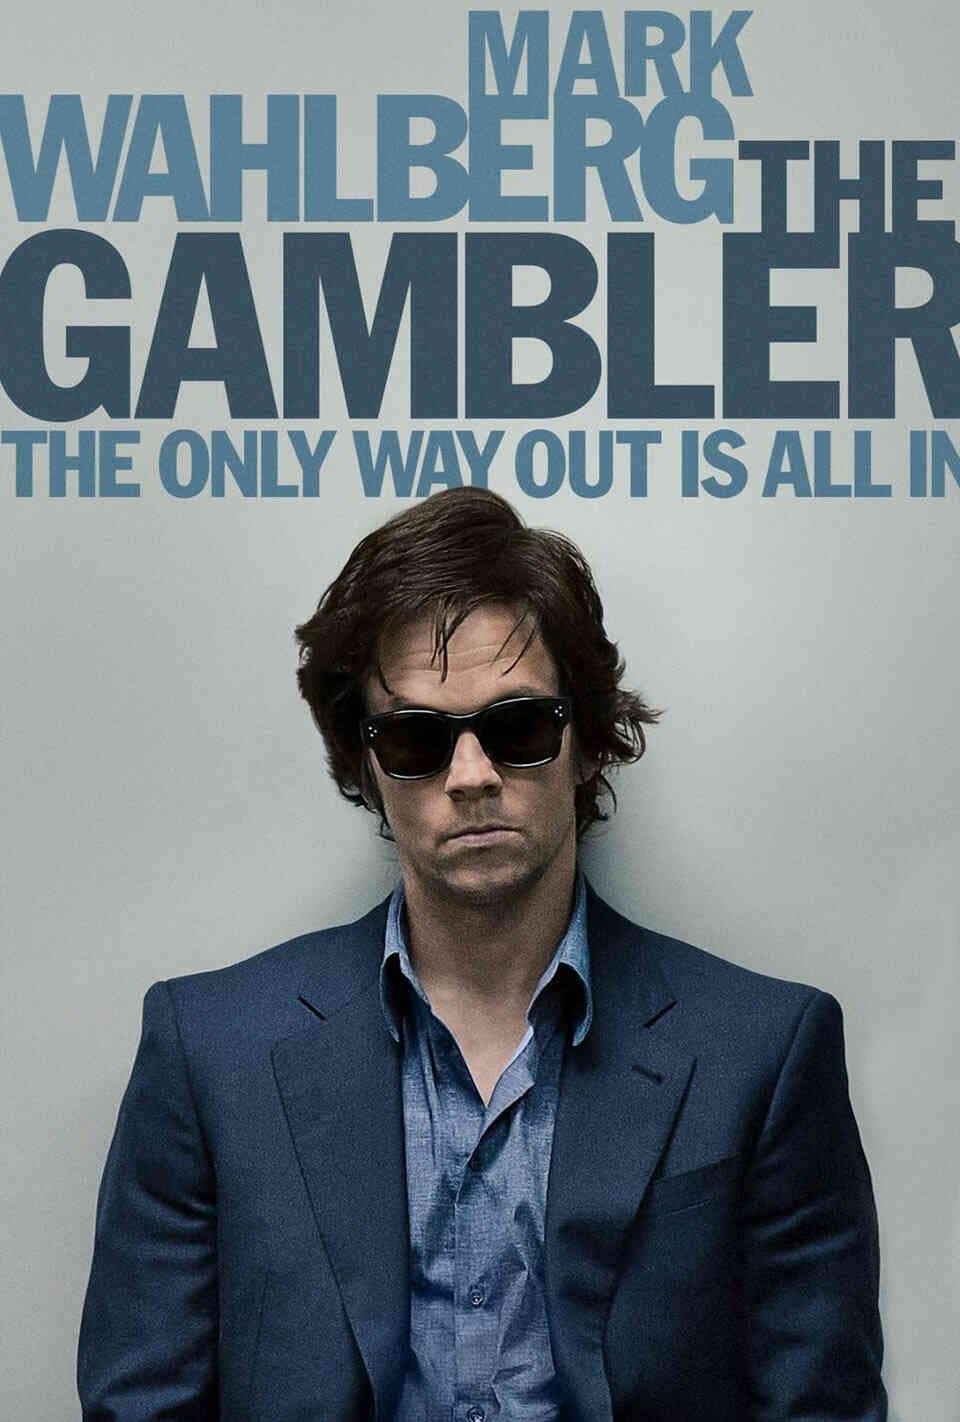 Read The Gambler screenplay.